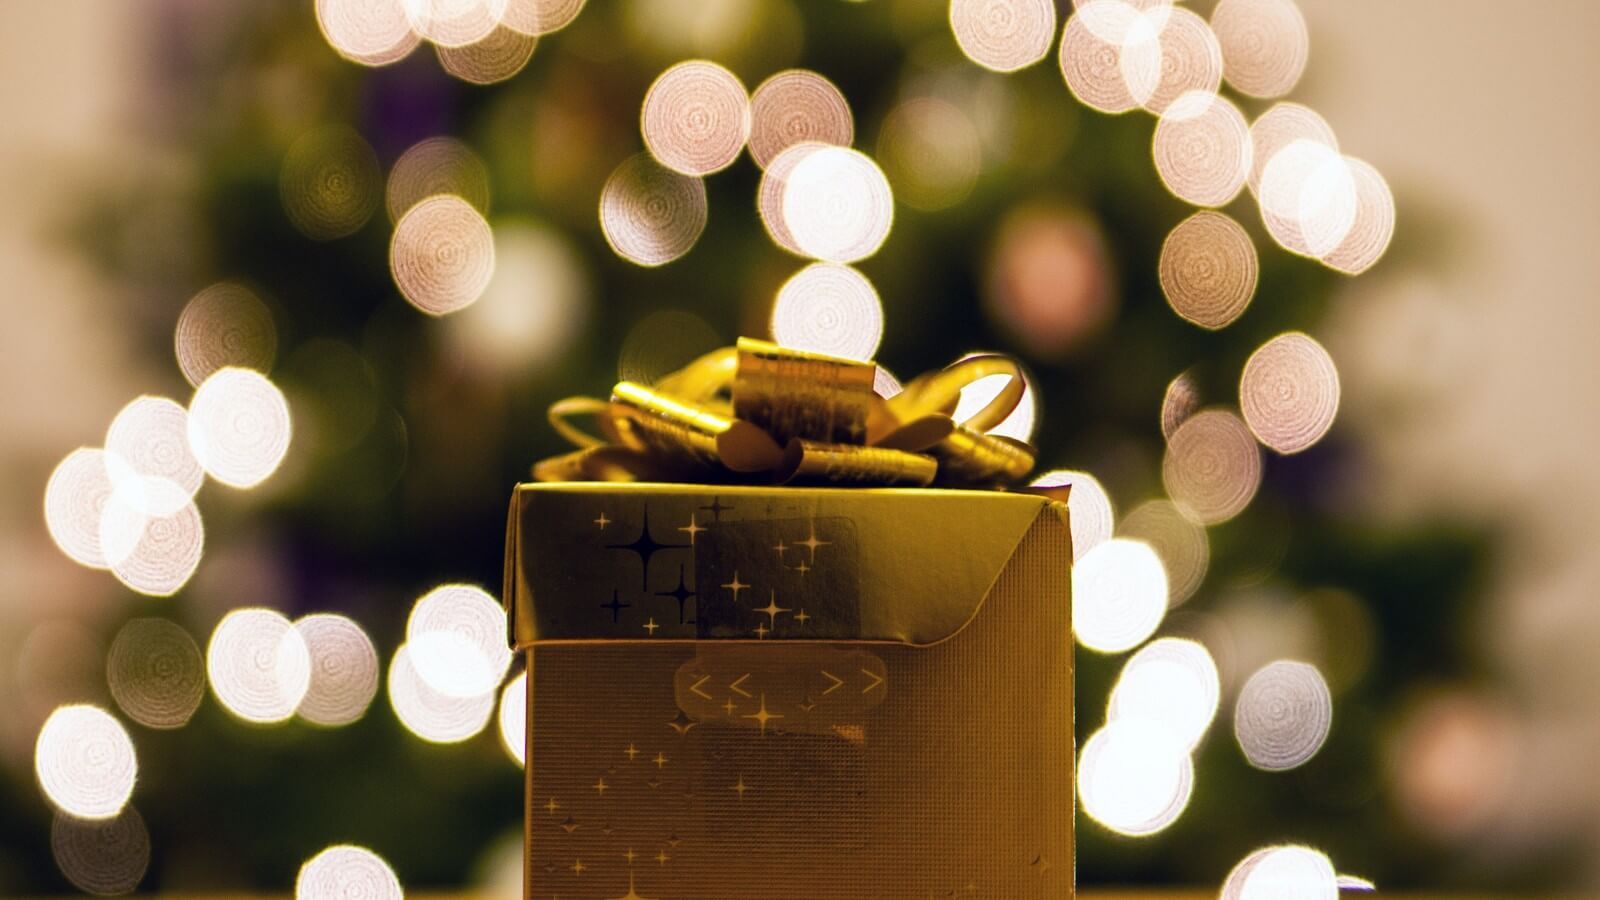 7 Tech Secret Santa Gift Ideas